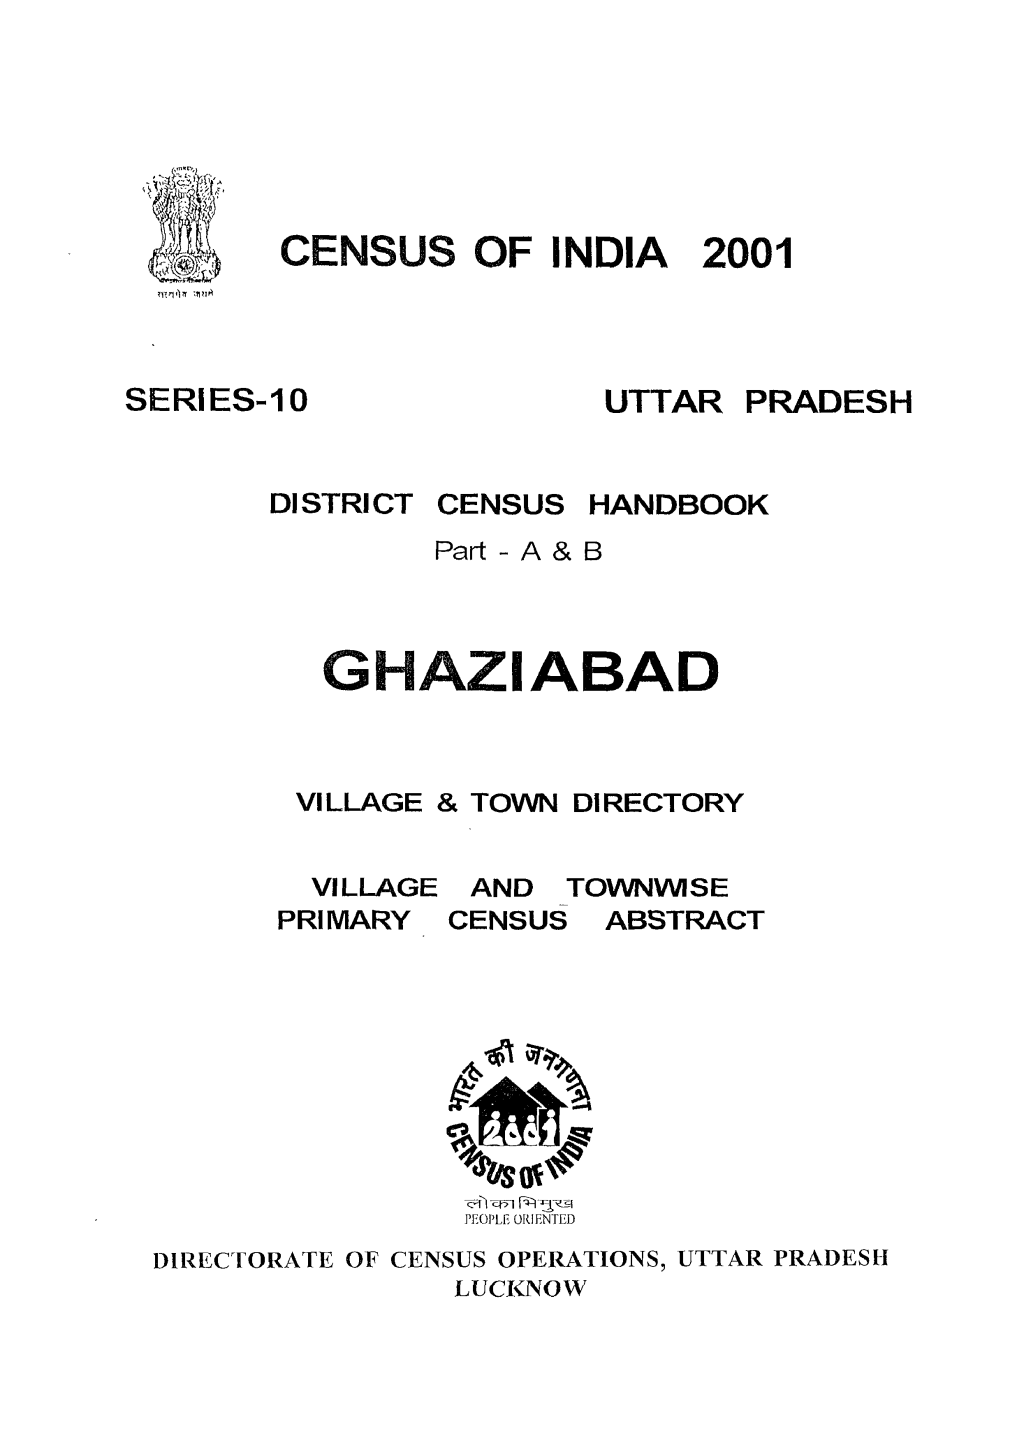 District Census Handbook, Ghaziabad, Part XII-A & B, Series-10, Uttar